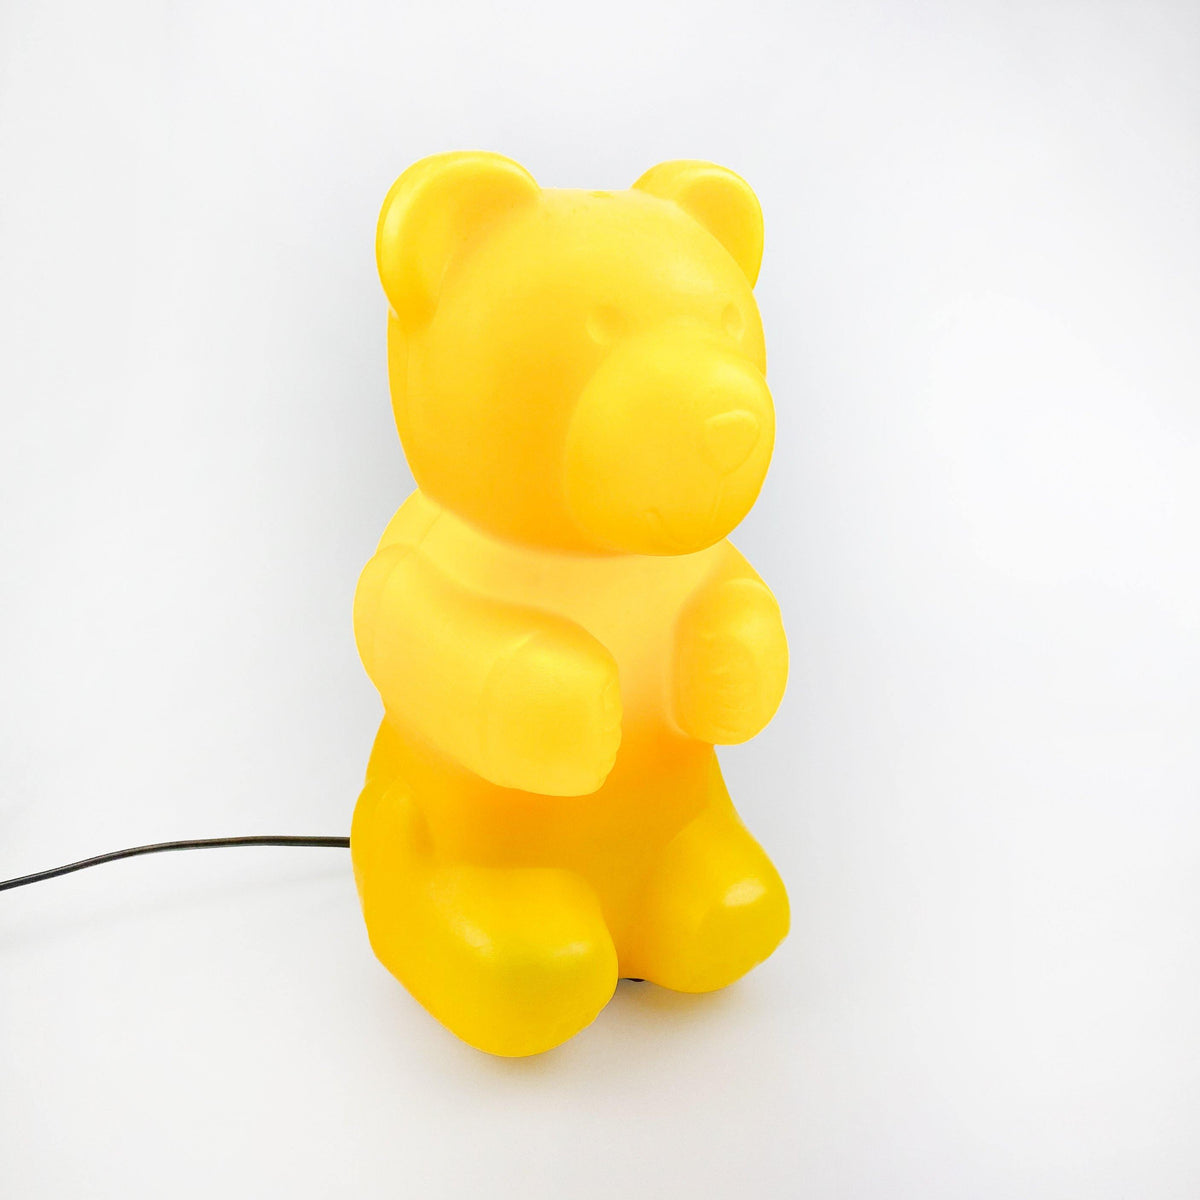 gummy bear lamp : r/HorribleToClean